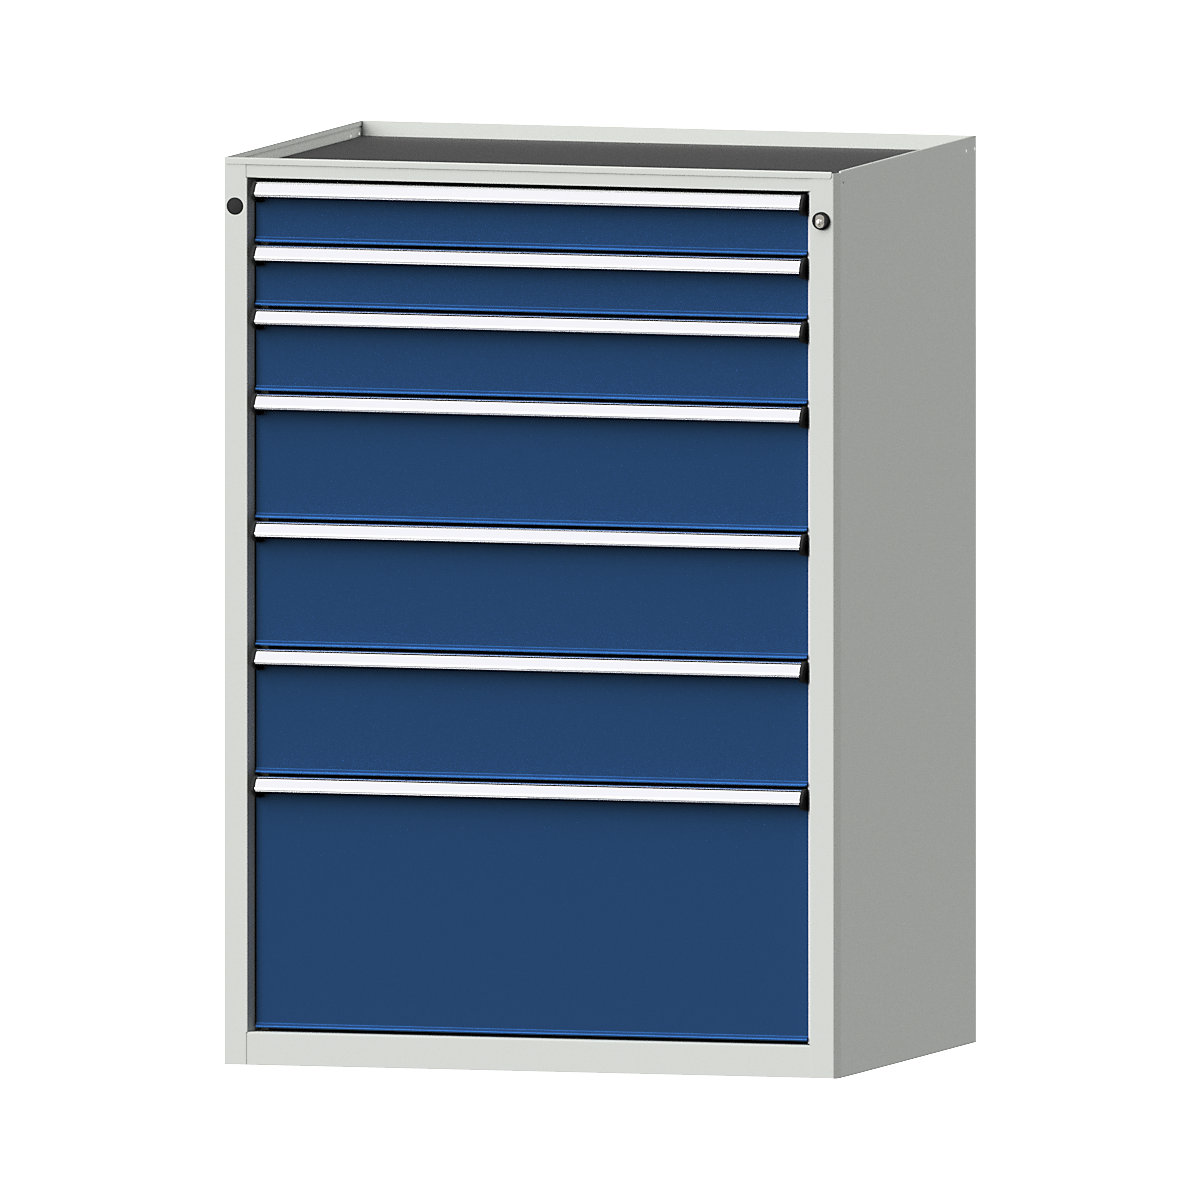 Armoire à tiroirs – ANKE, l x p 910 x 675 mm, 7 tiroirs, hauteur 1280 mm, façade bleu gentiane-16